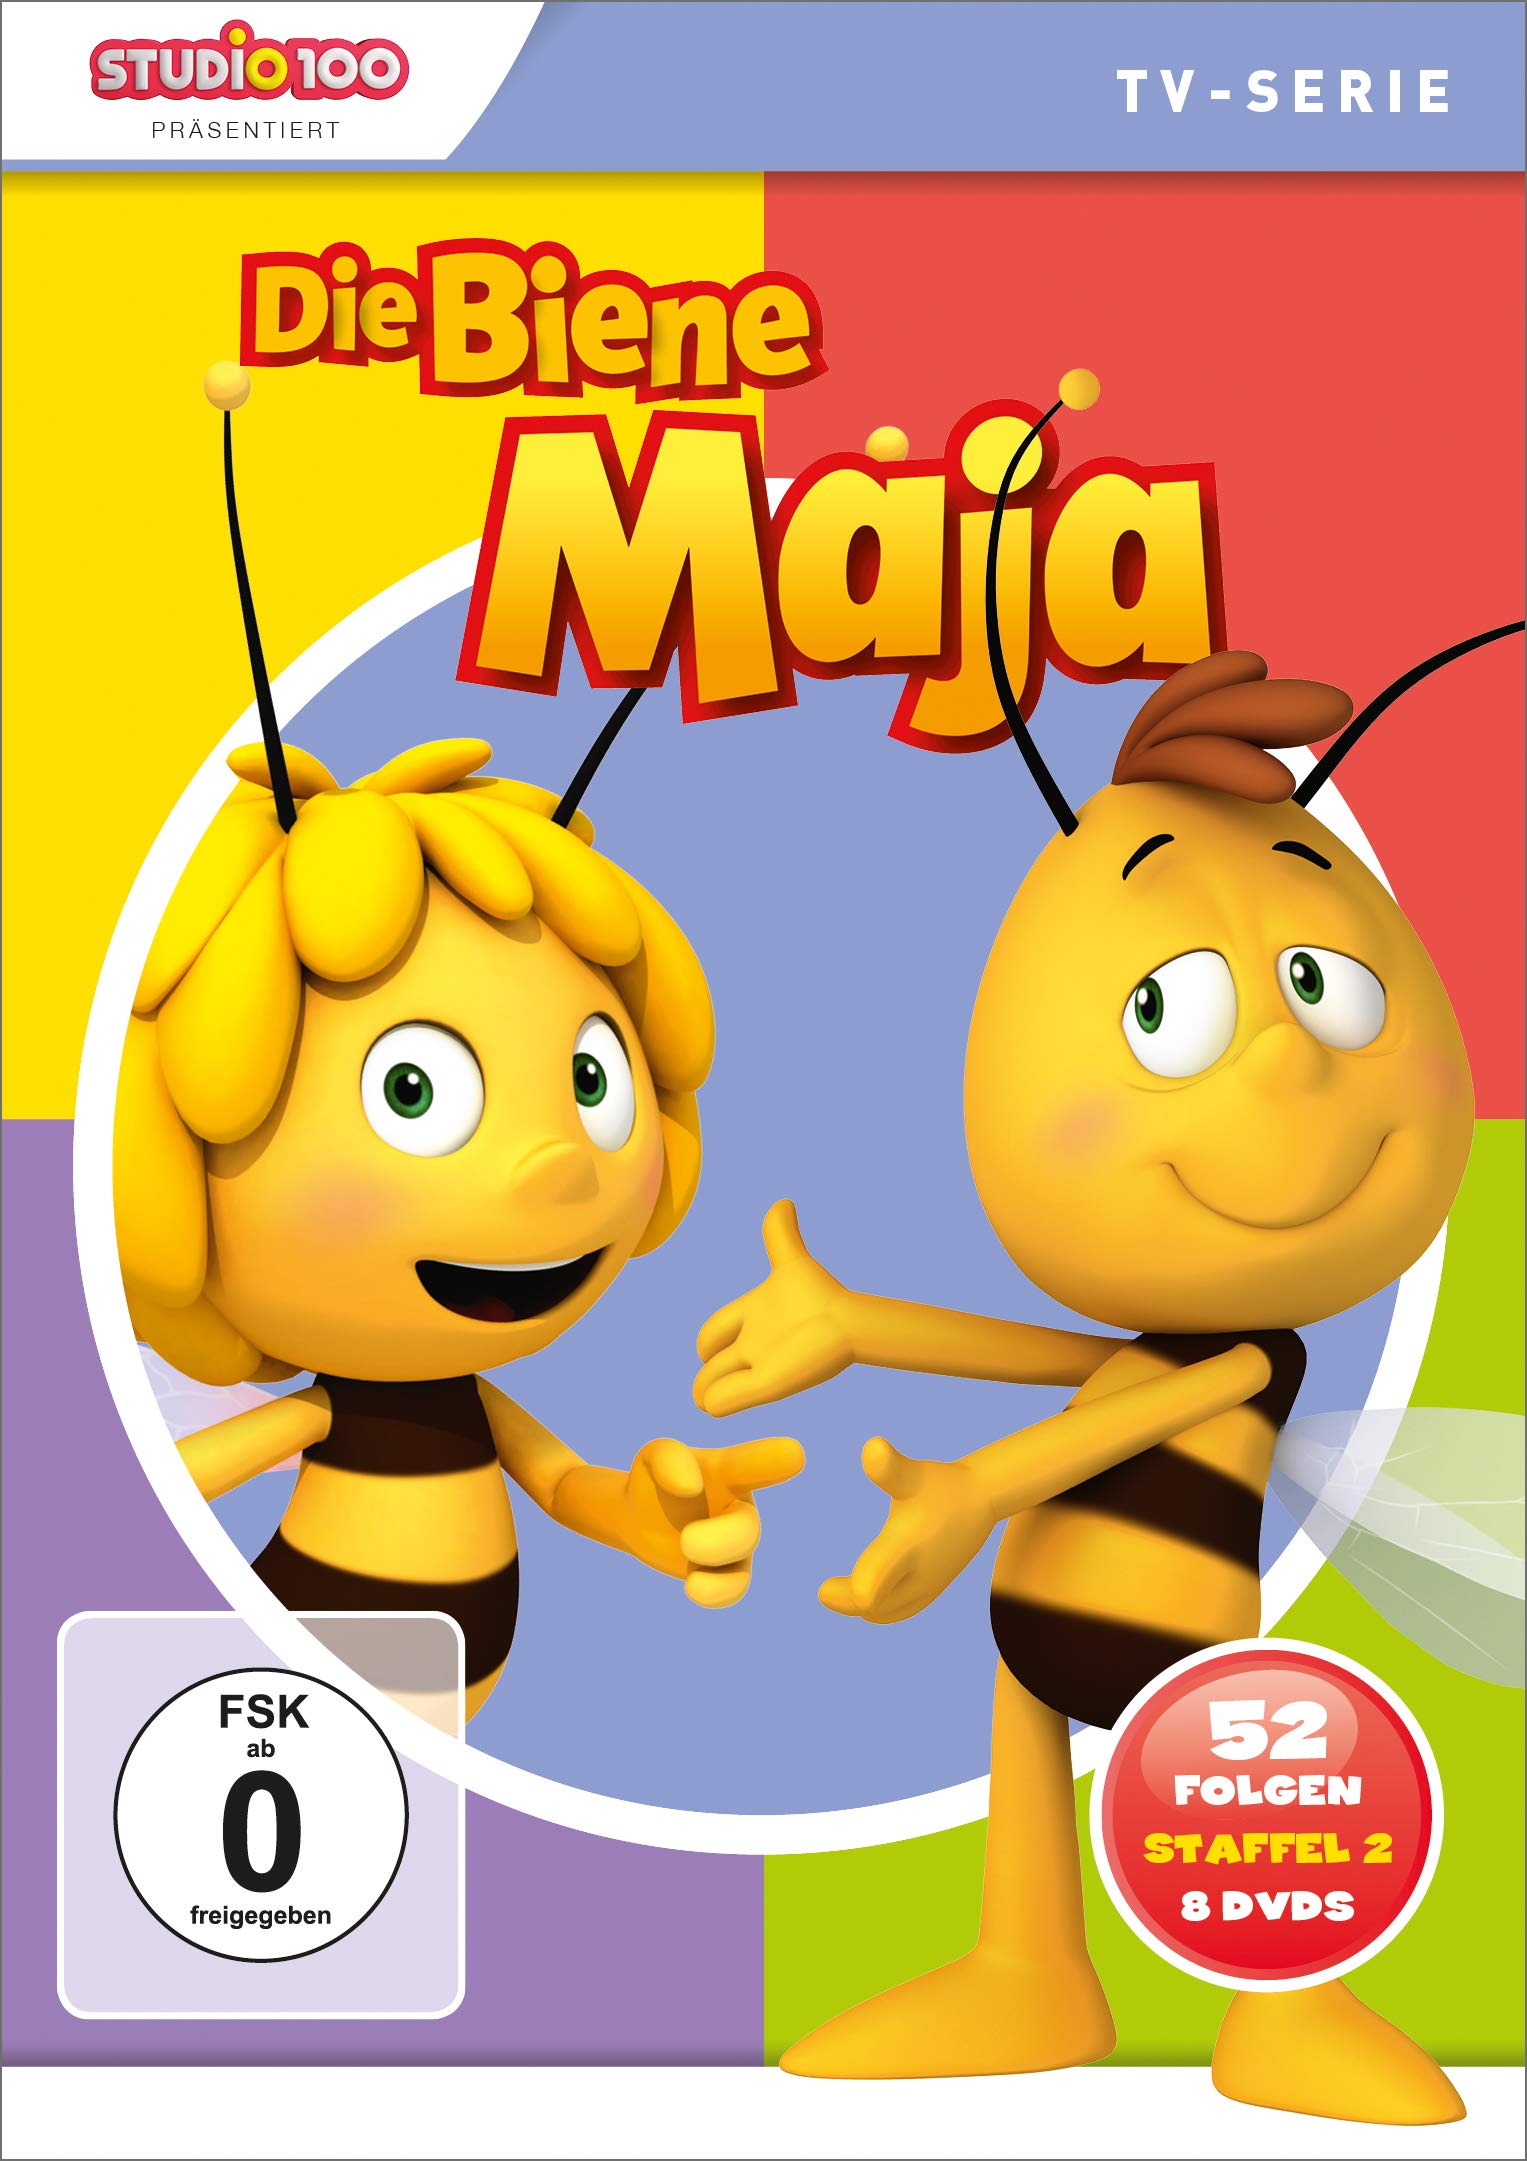 Die Biene Maja - Komplettbox, Staffel 2, 52 Folgen [8 DVDs]